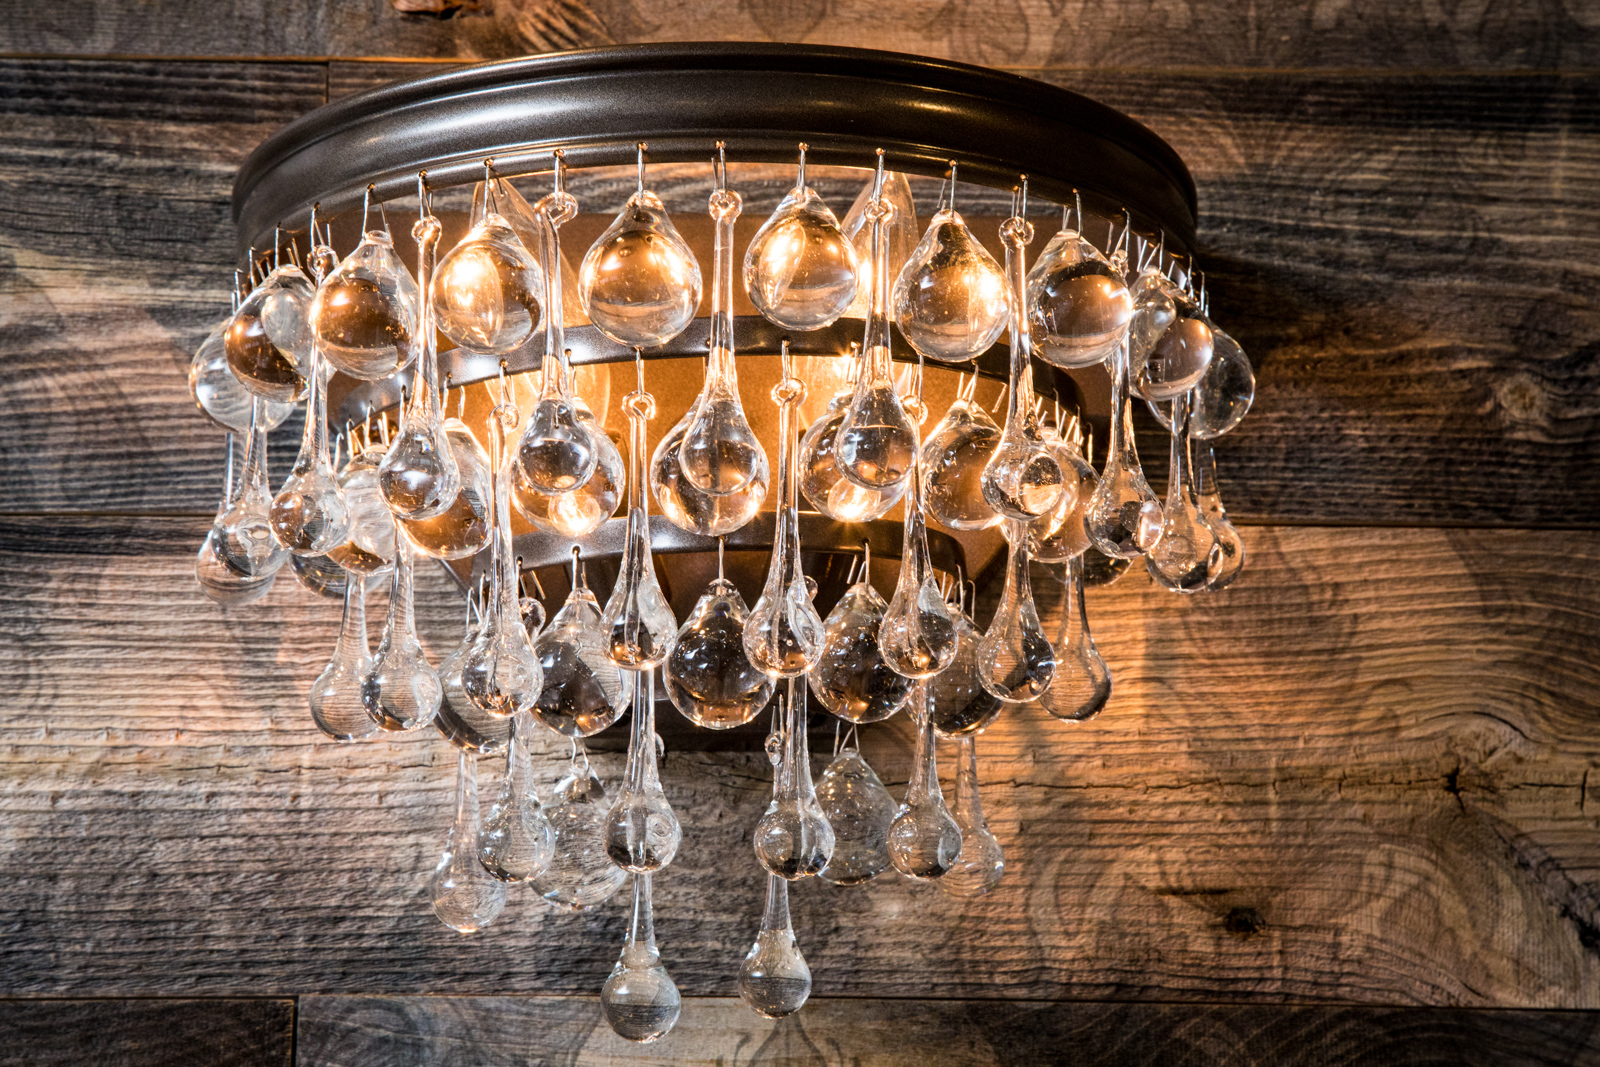 Modern Bar and Restaurant Interior Design, chandelier and lighting design